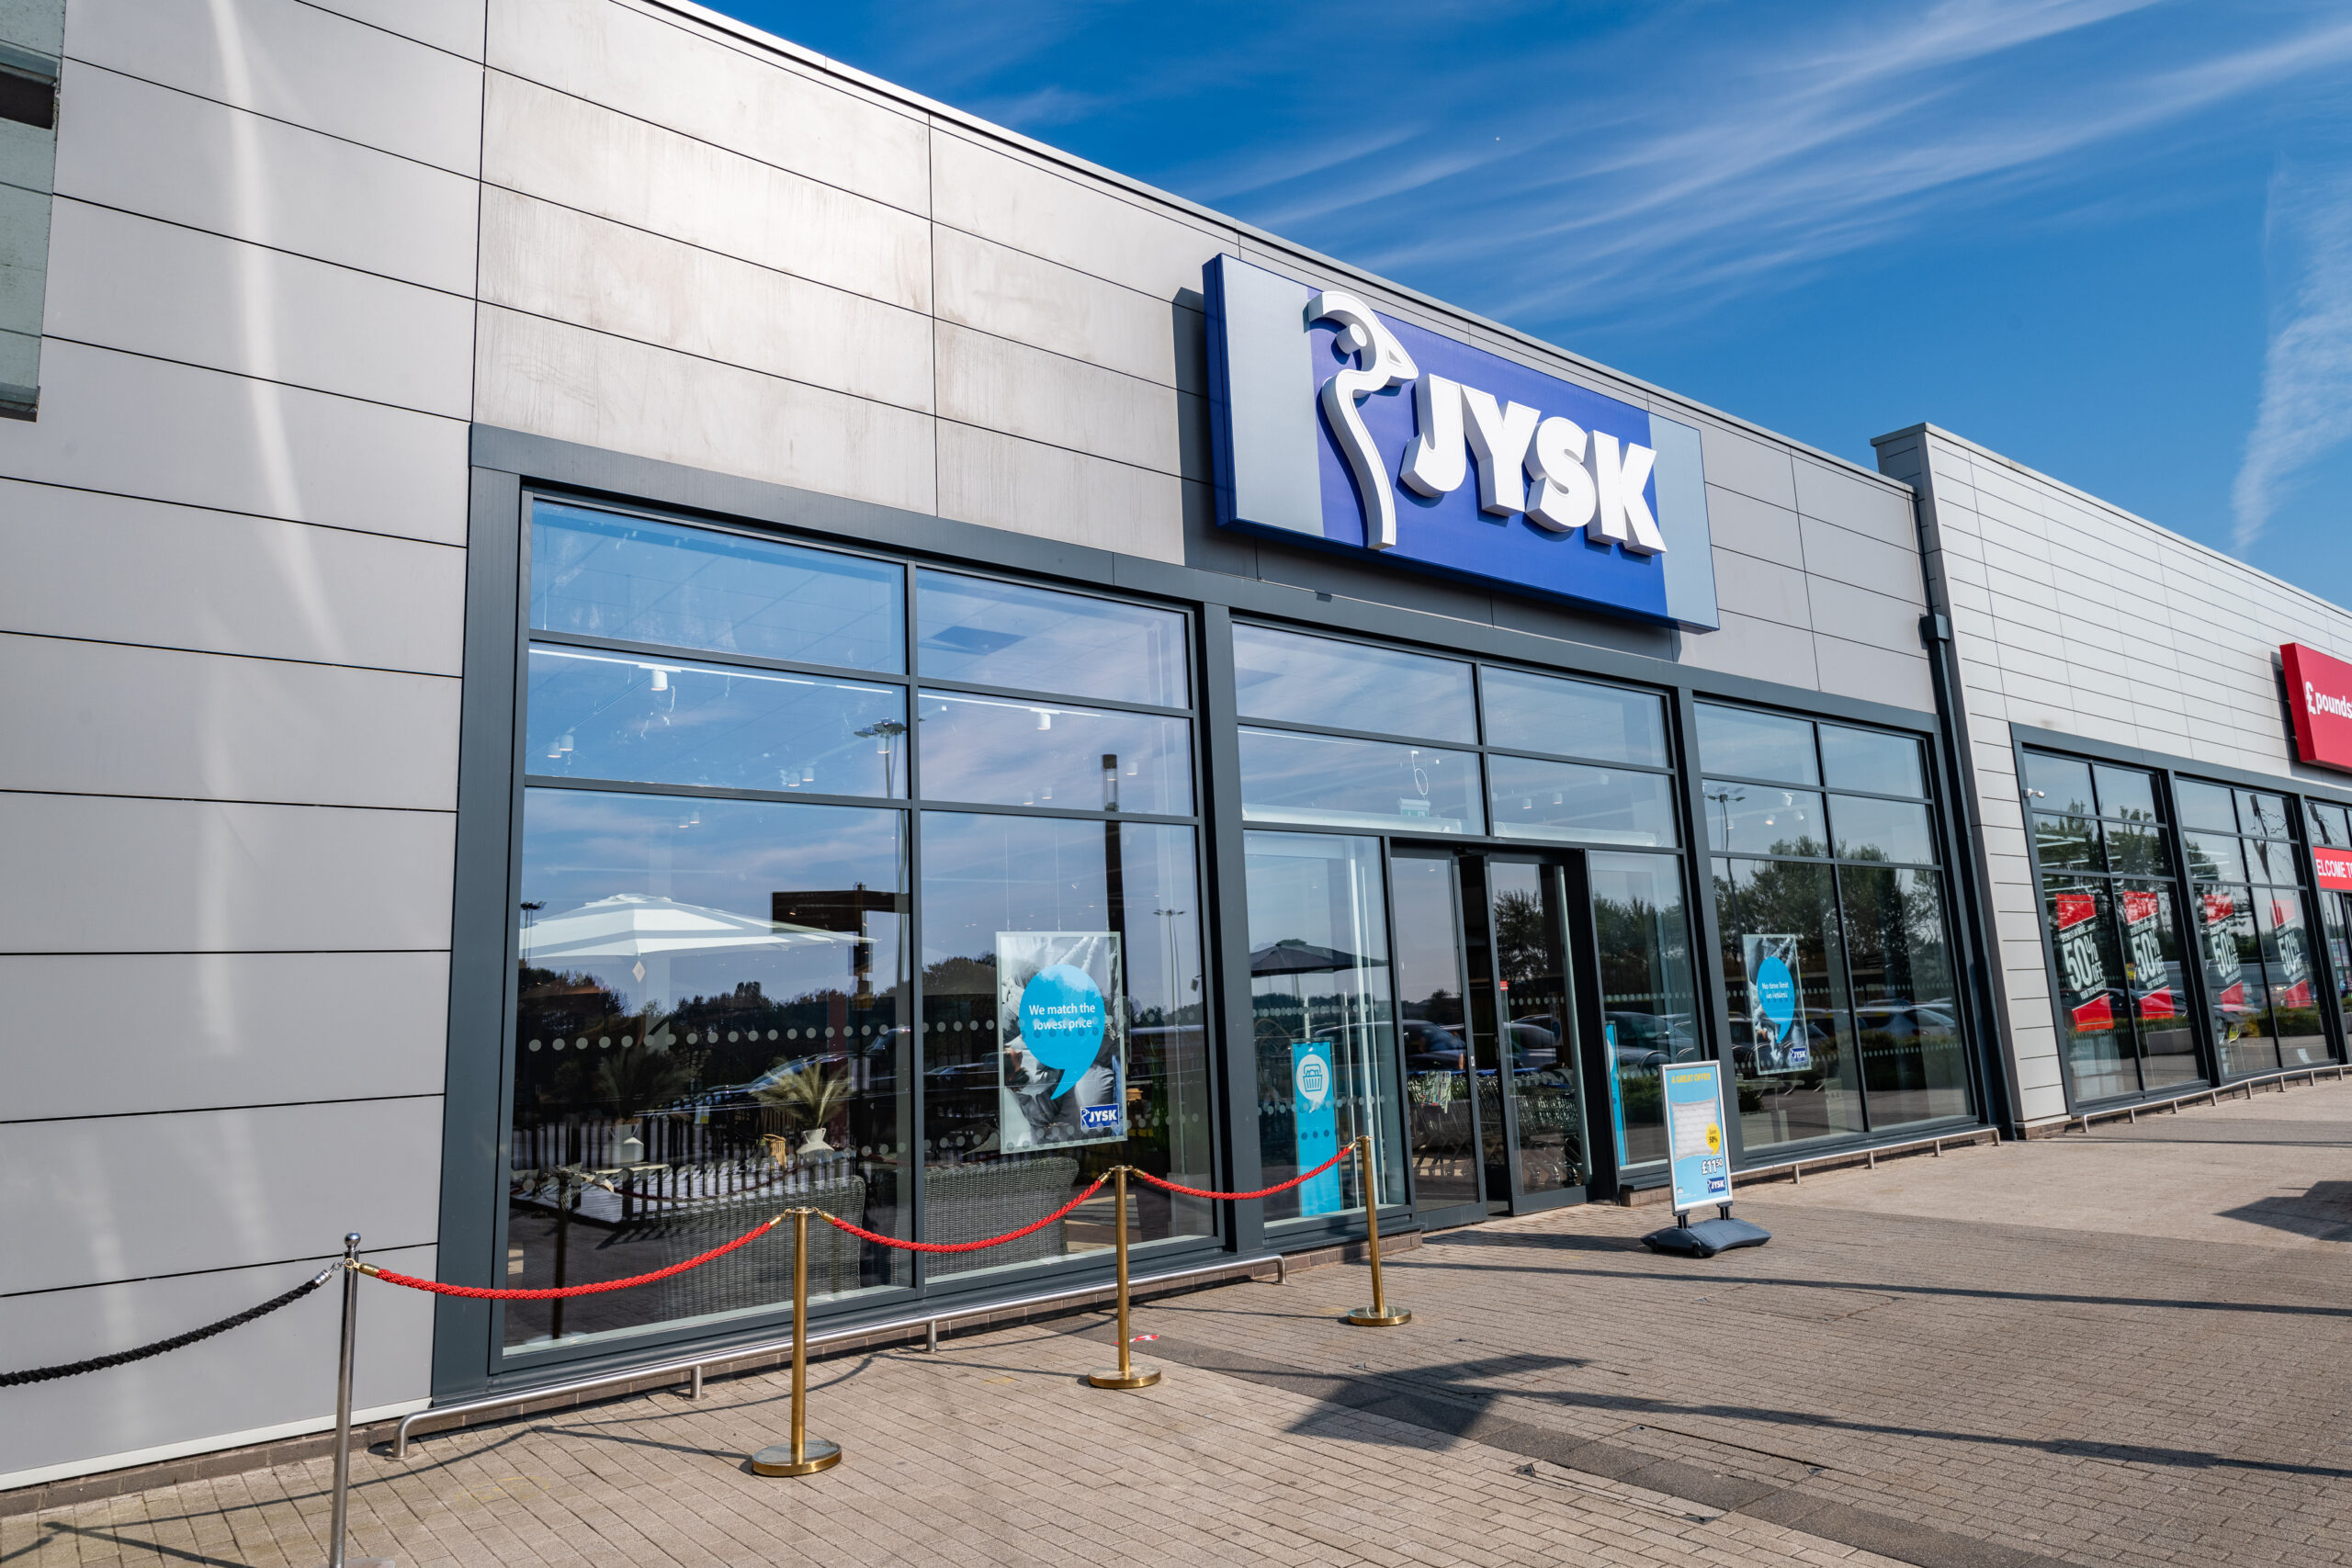 JYSK Telford store front, opened June 2022